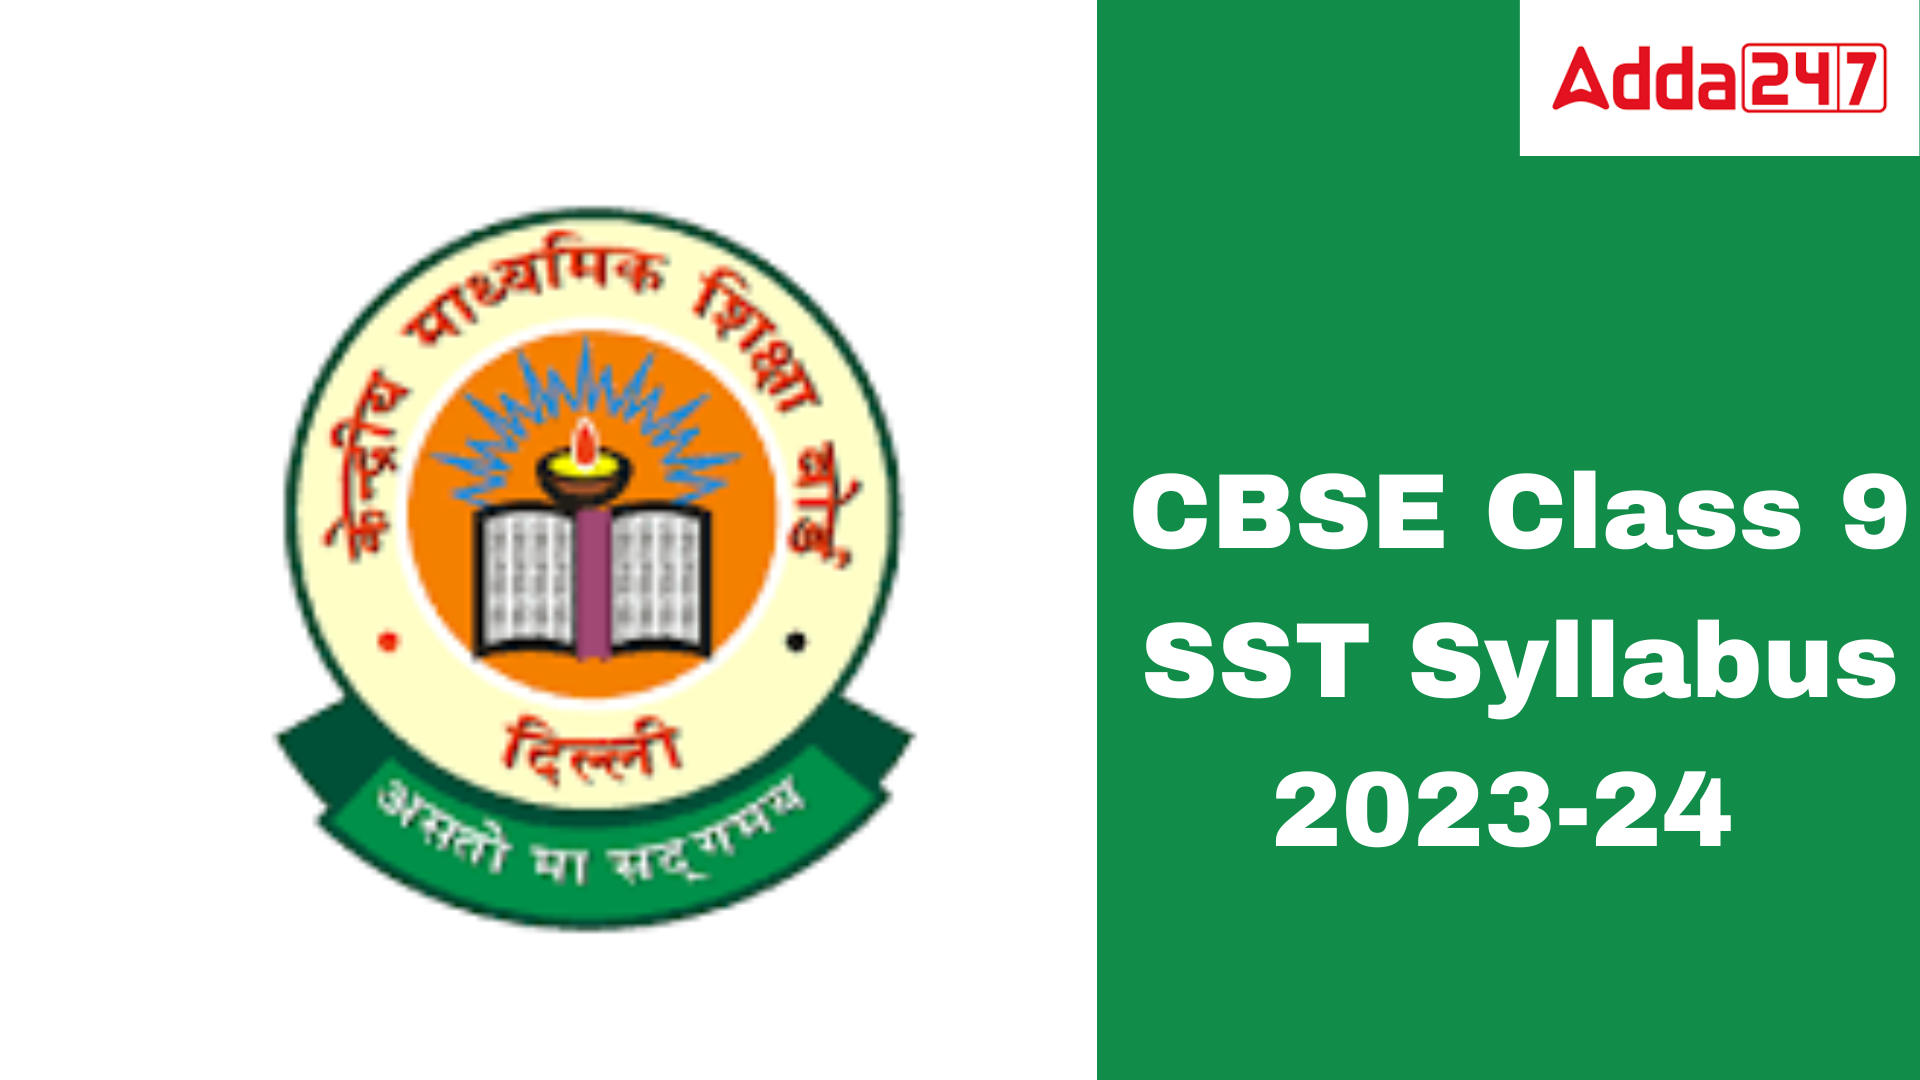 CBSE Class 9 SST Syllabus 2023-24